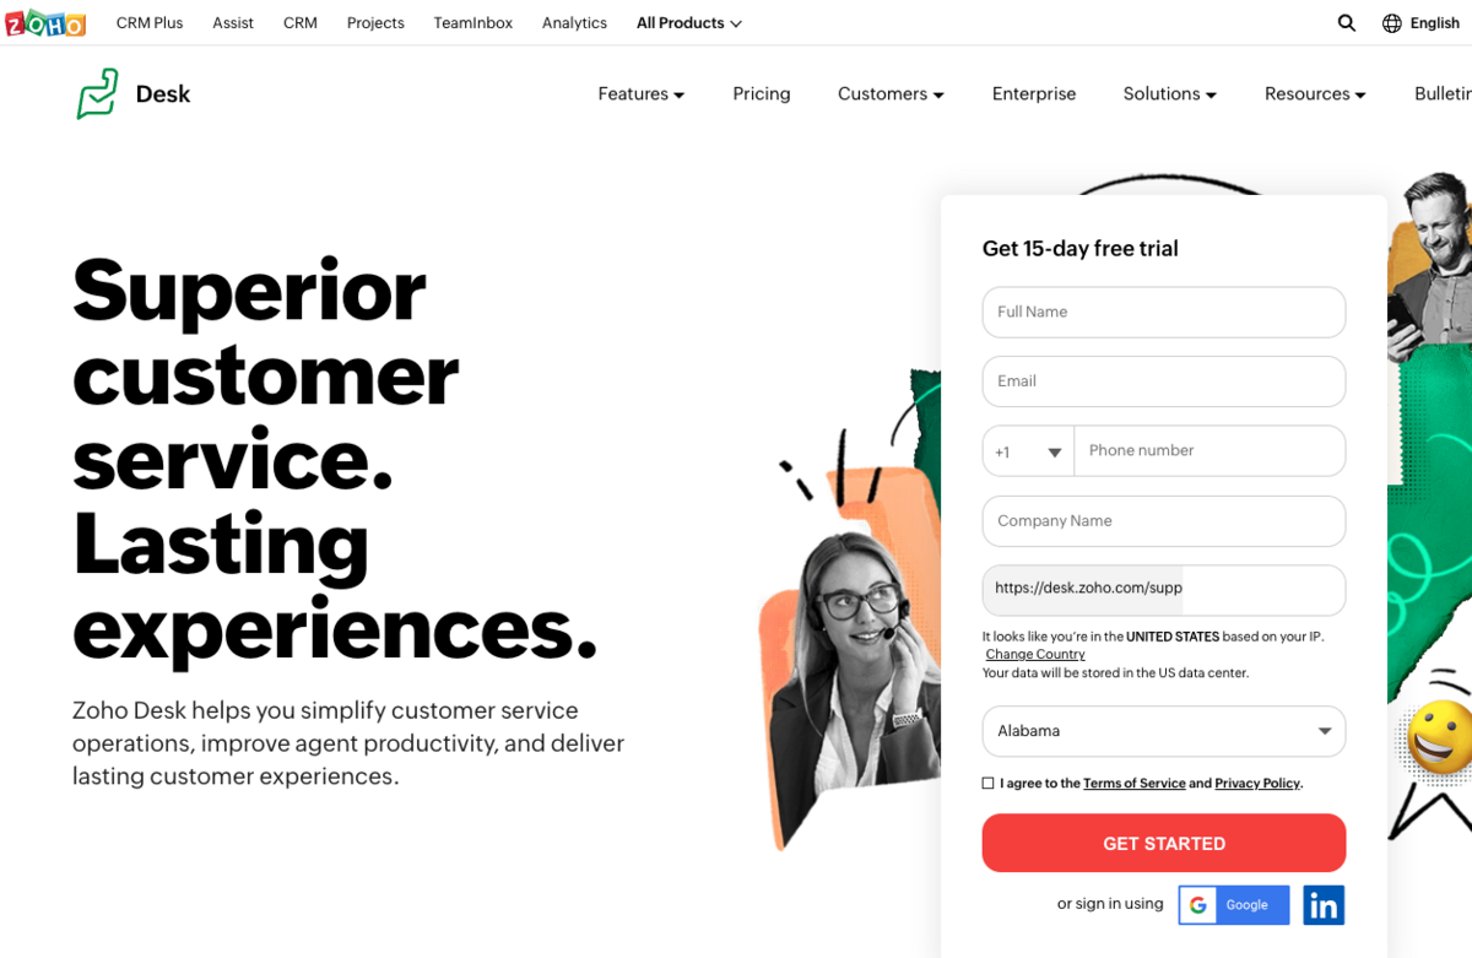 Zoho Desk: Superior customer service. Lasting experiences. 